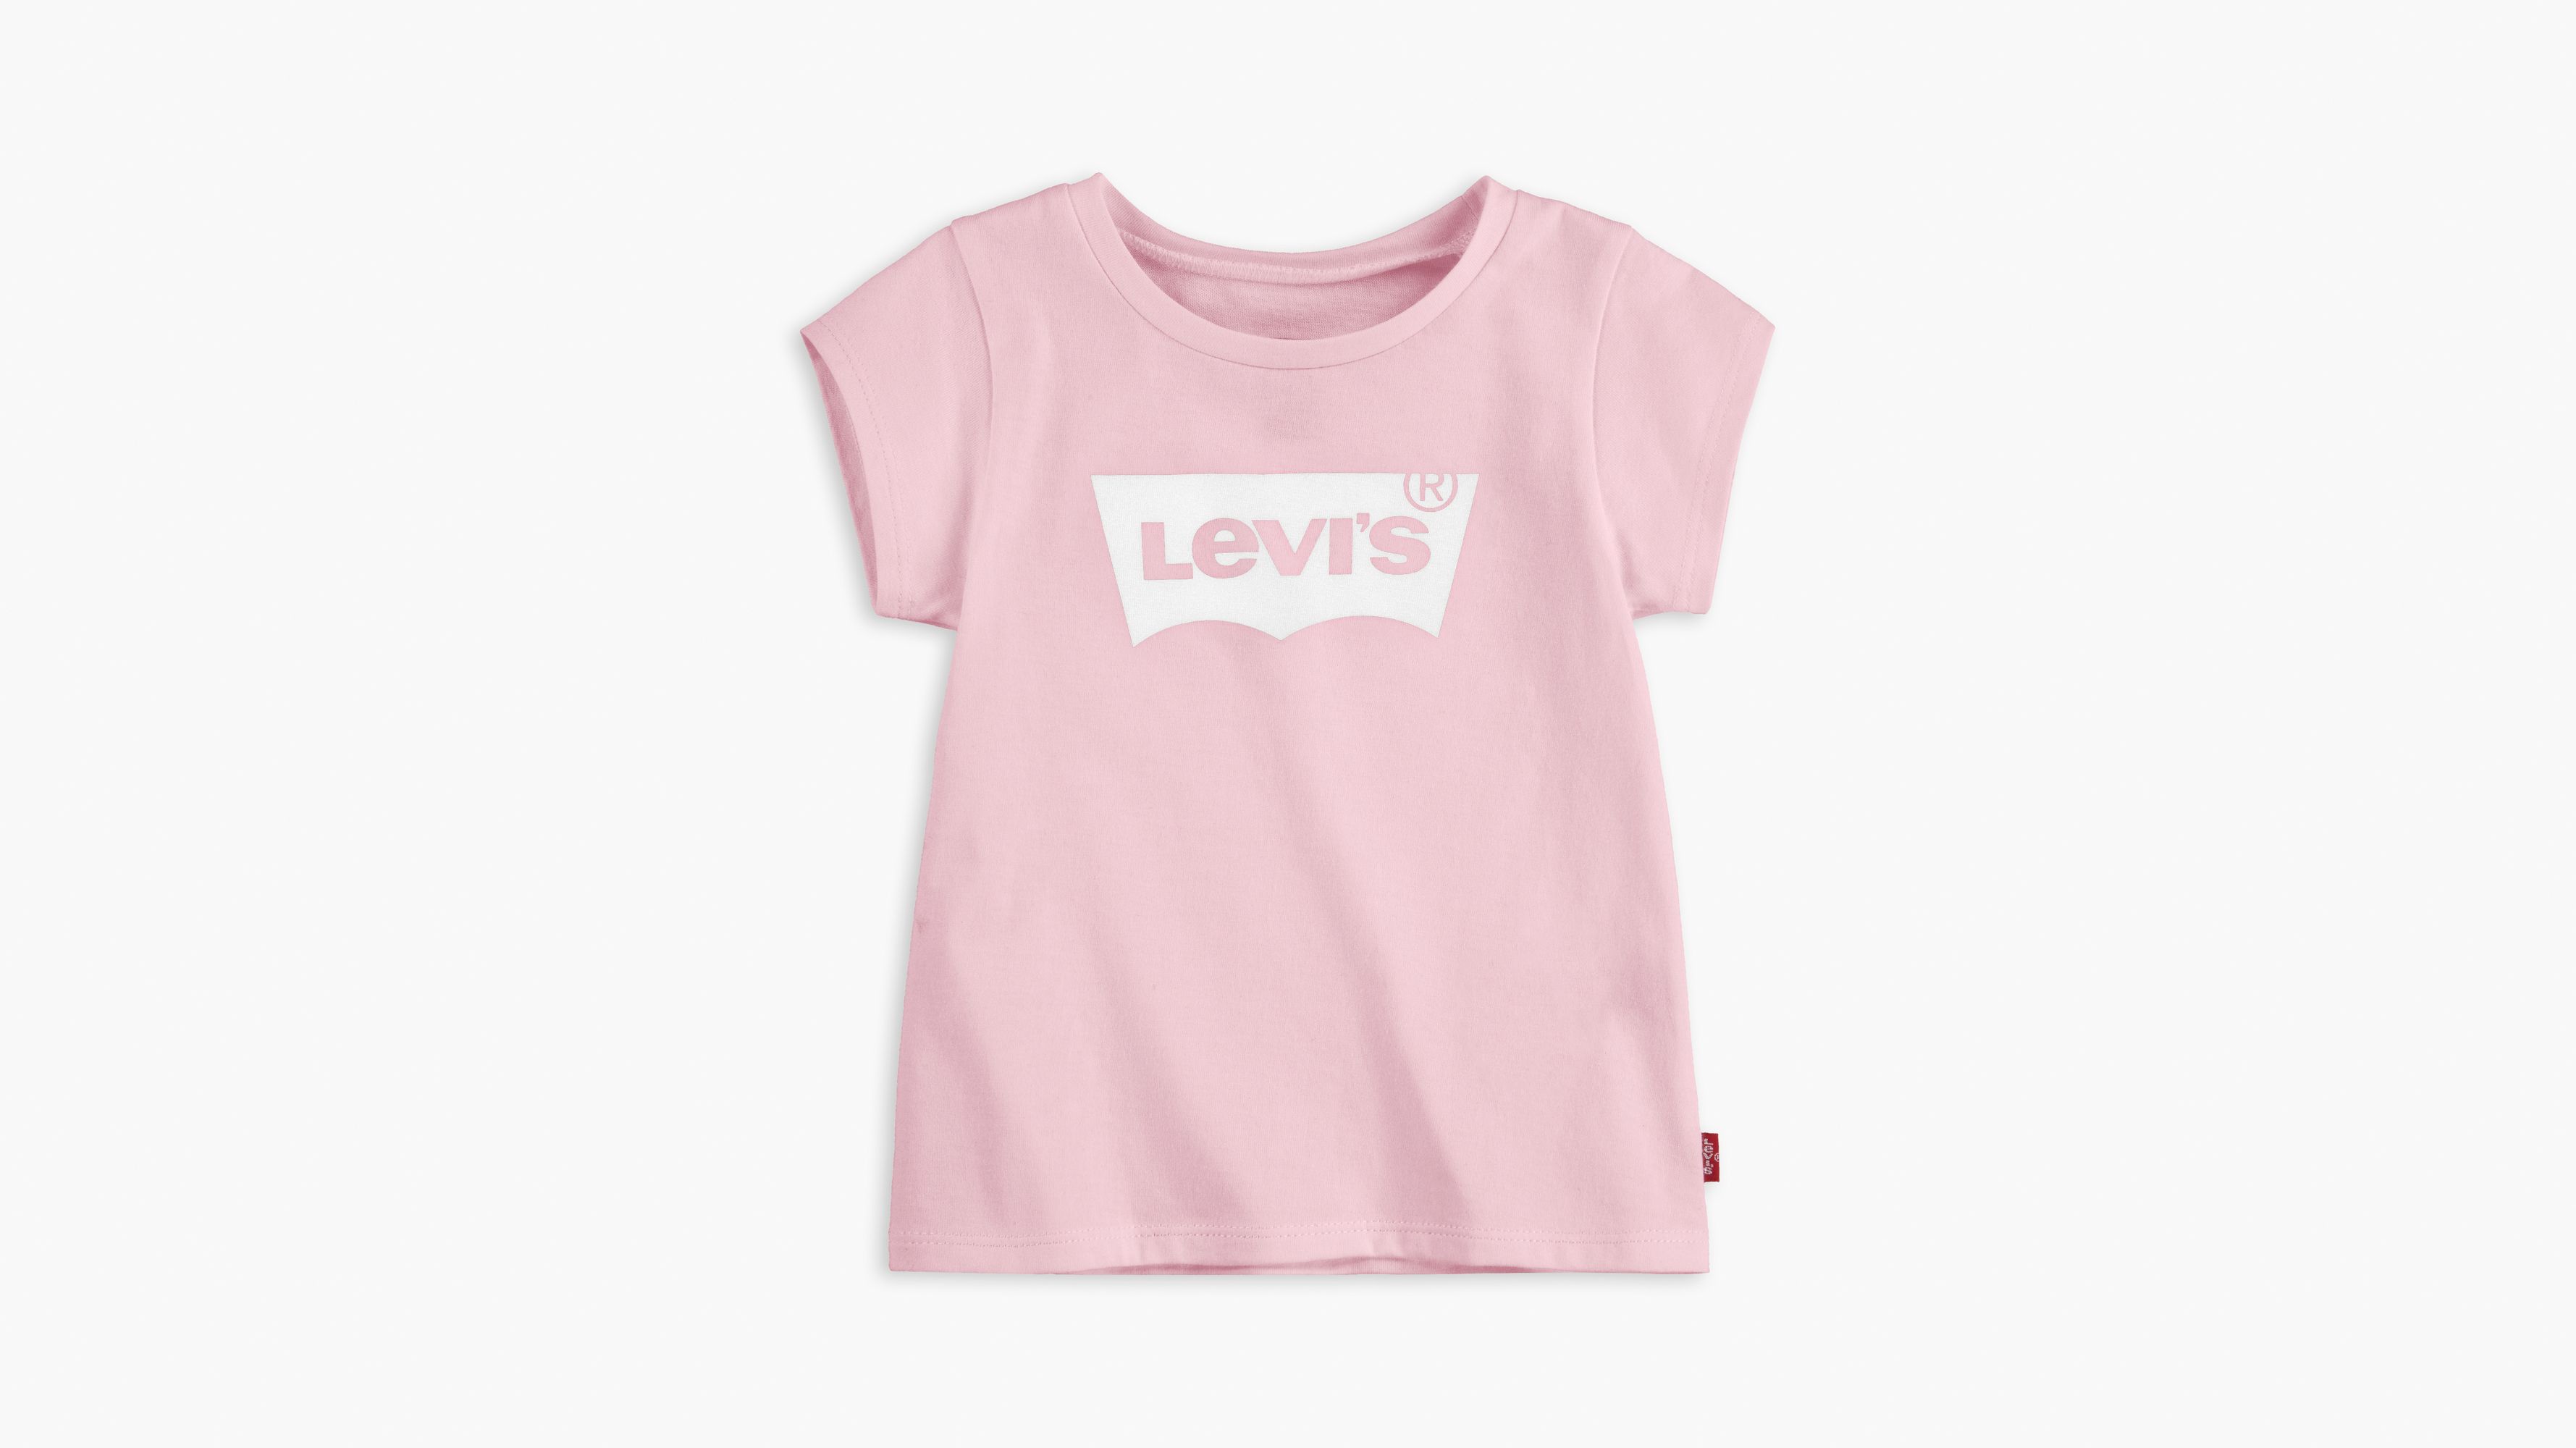 levis tshirt baby